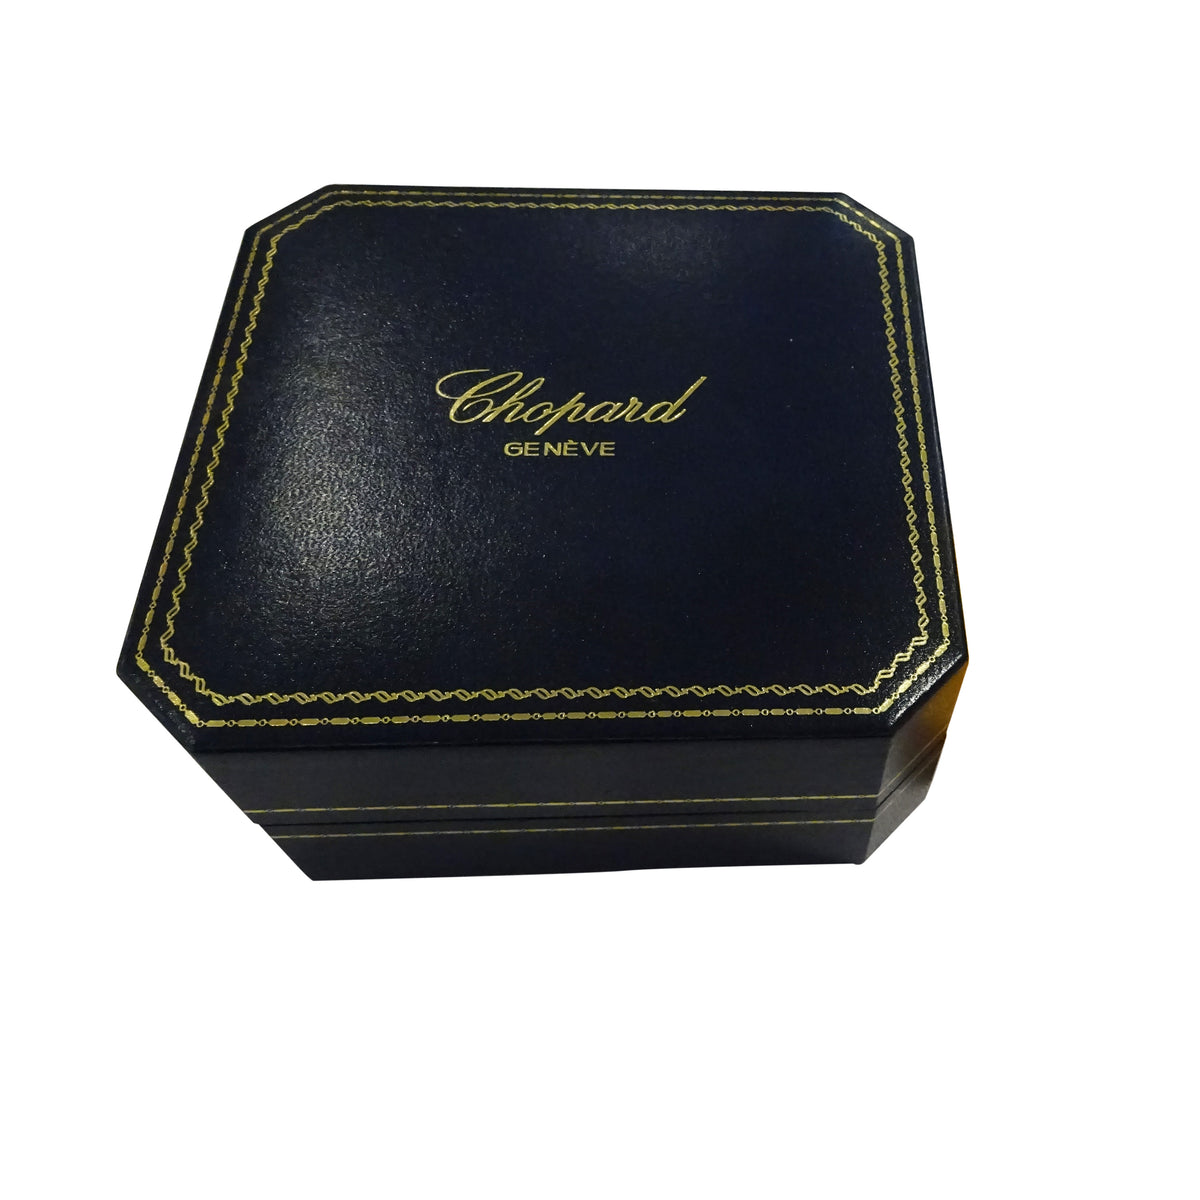 Chopard Gstaad 33/8119 Men's Watch in 18kt Yellow Gold/Steel